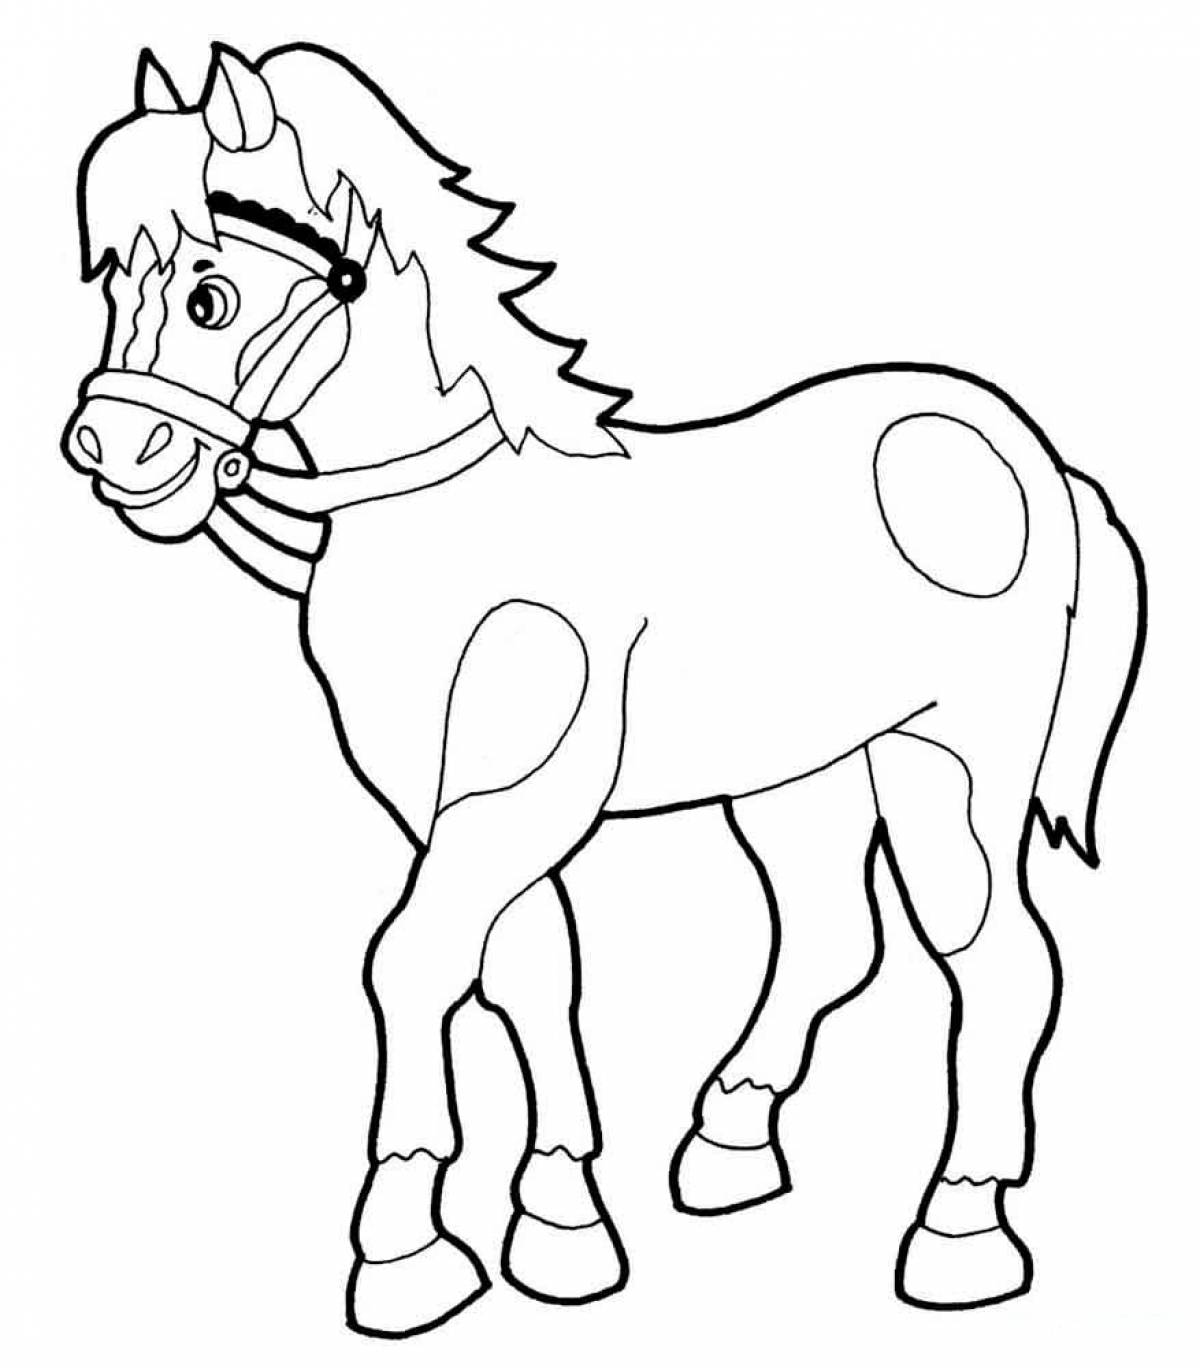 Joyful horse coloring for kids